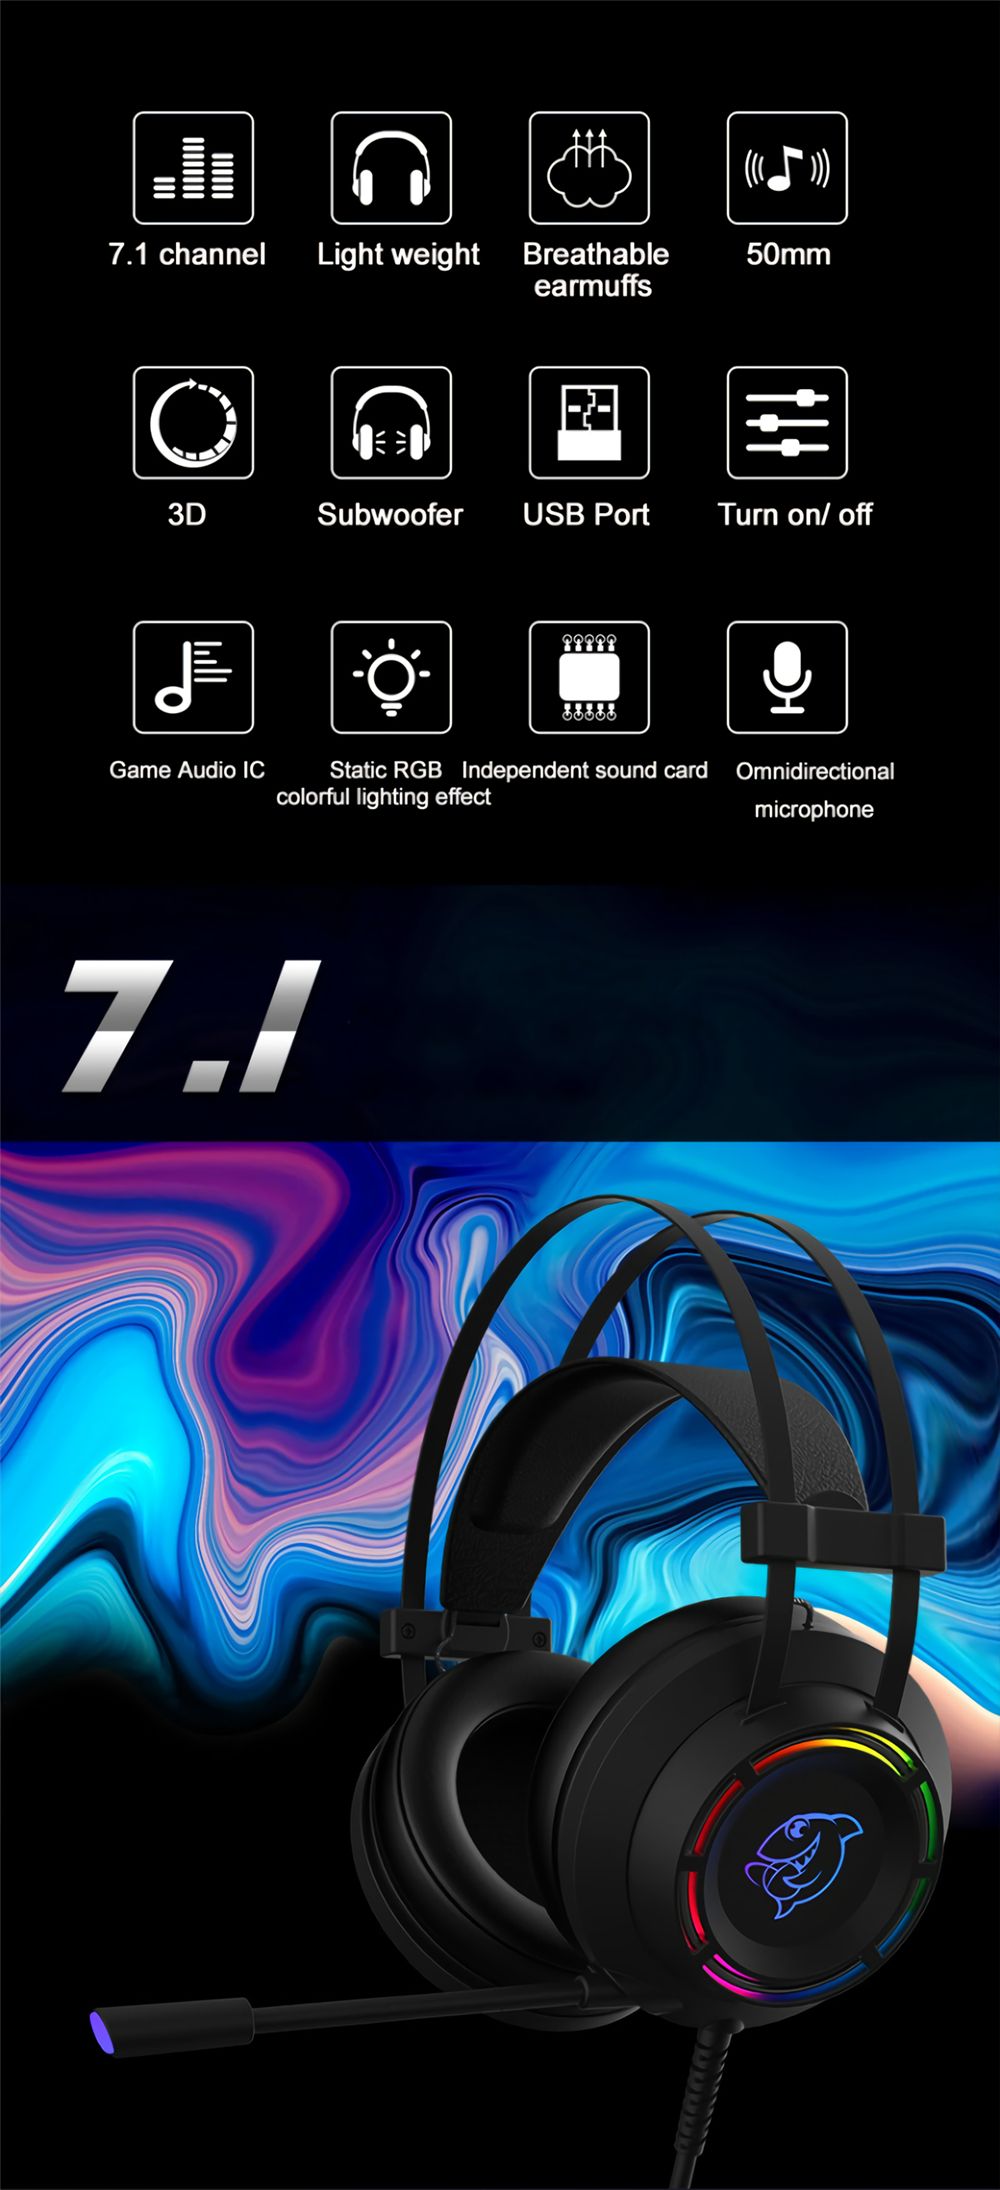 DOUYU-DHG160-Graffiti-Game-Headset-USB-Wired-Bass-Gaming-Headphone-Stereo-Earphone-Headphones-with-M-1710660